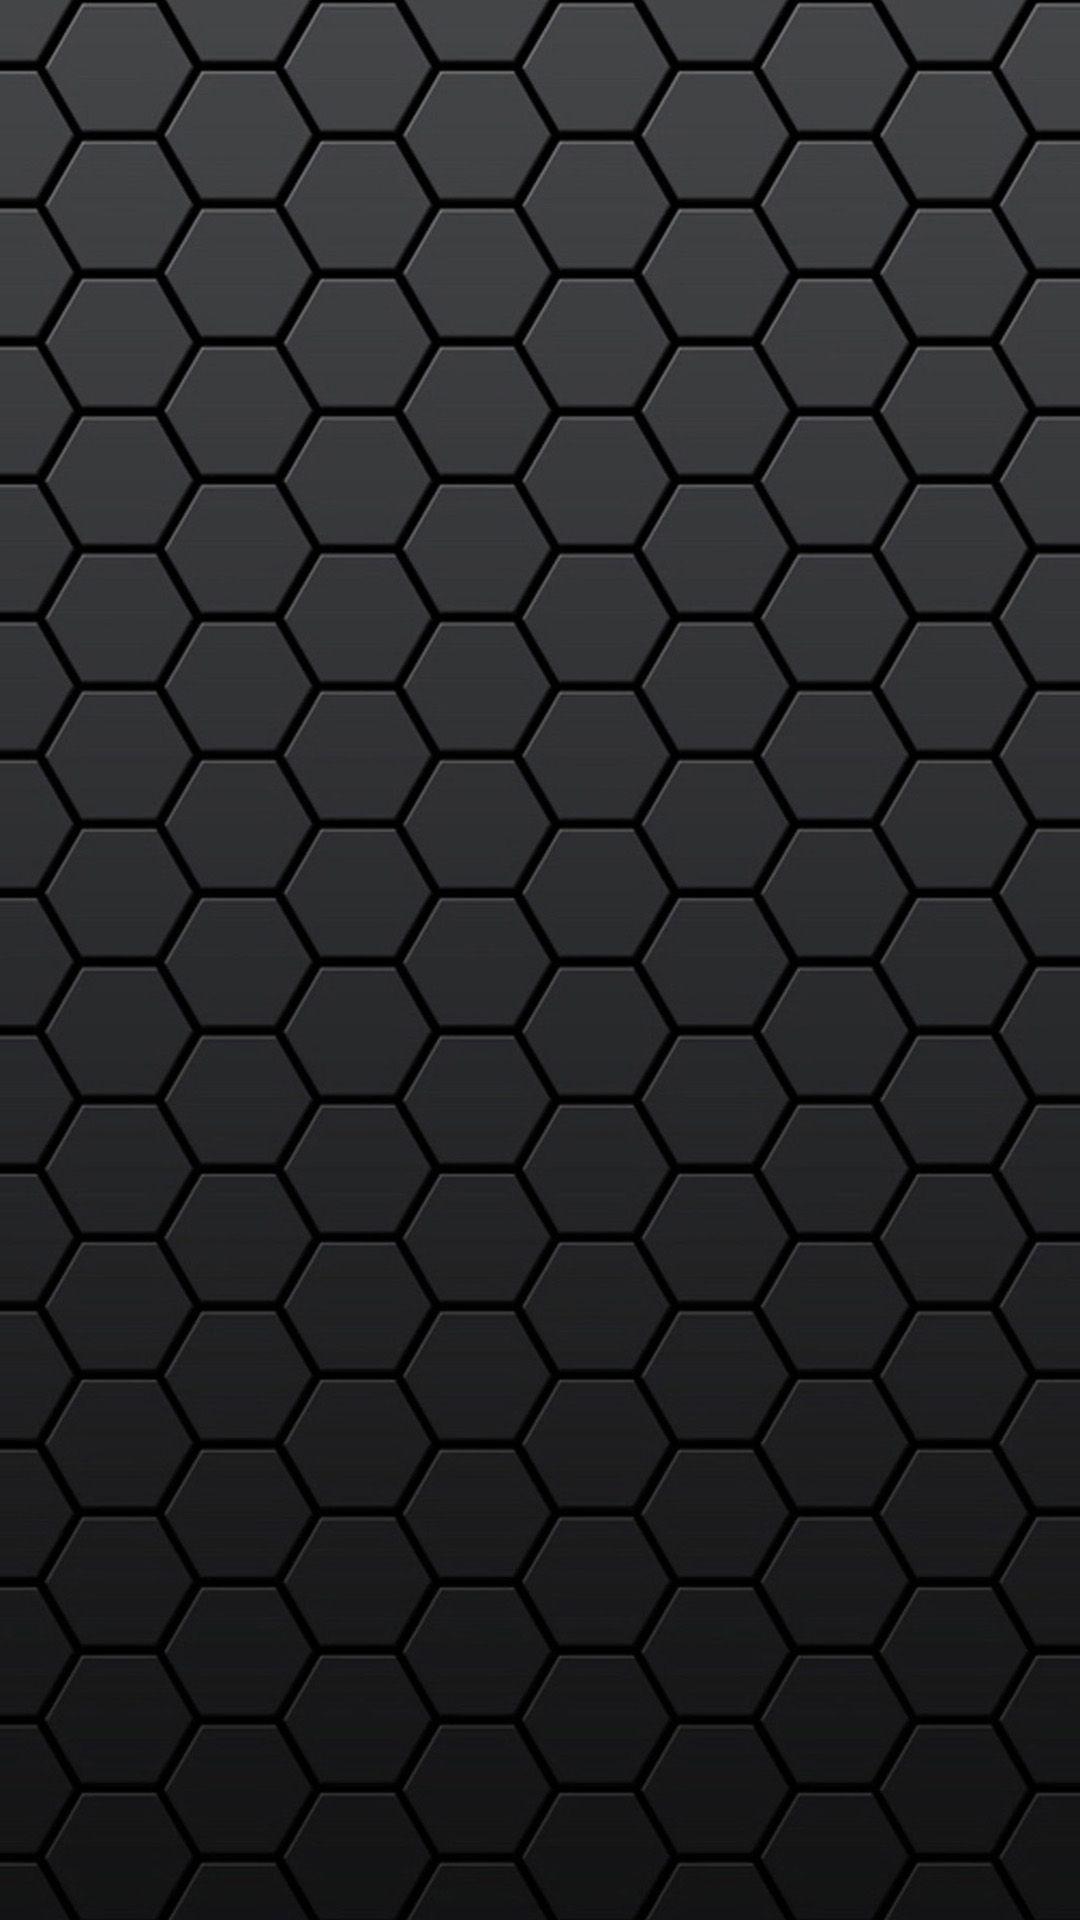 Wallpaper Iphone X Carbon